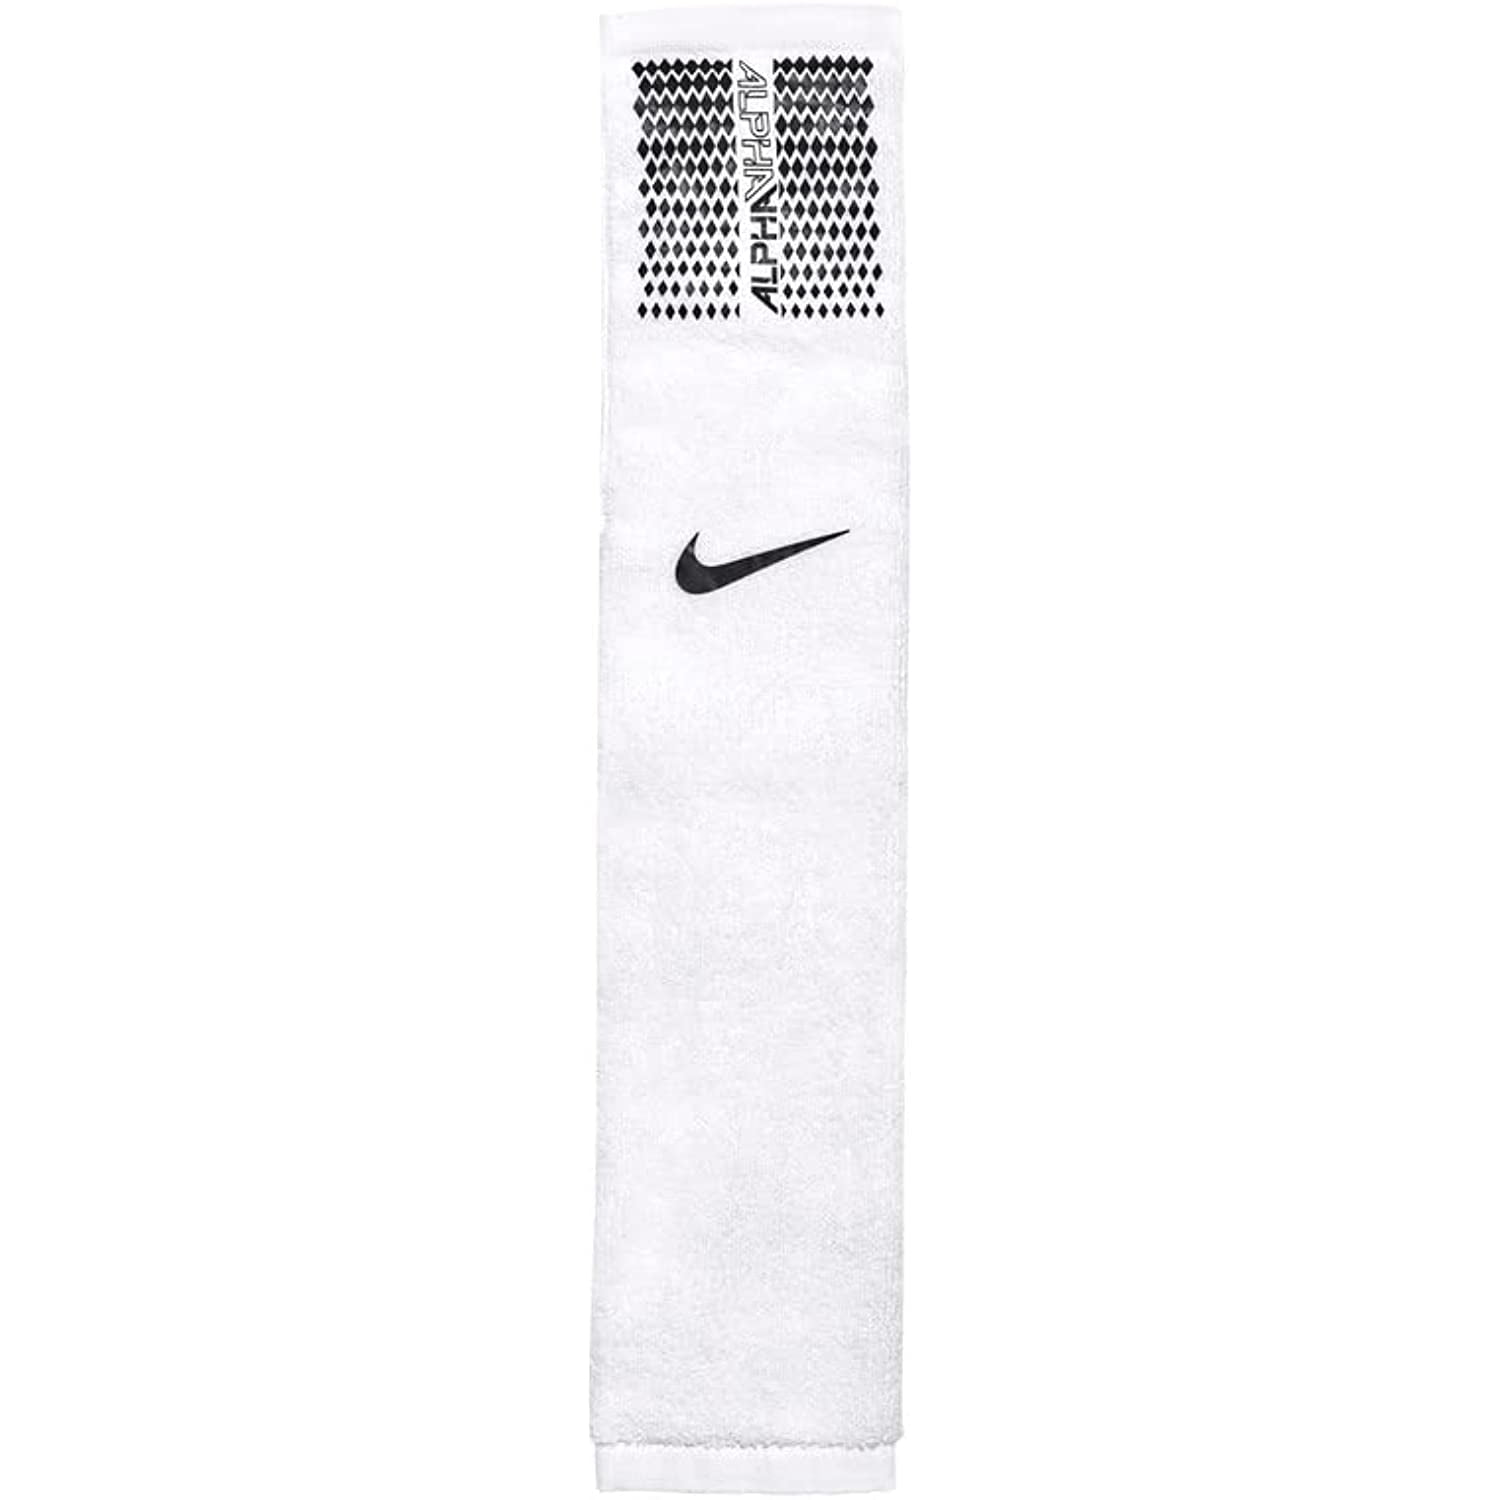 Nike Football Towel, White Alpha - Walmart.com